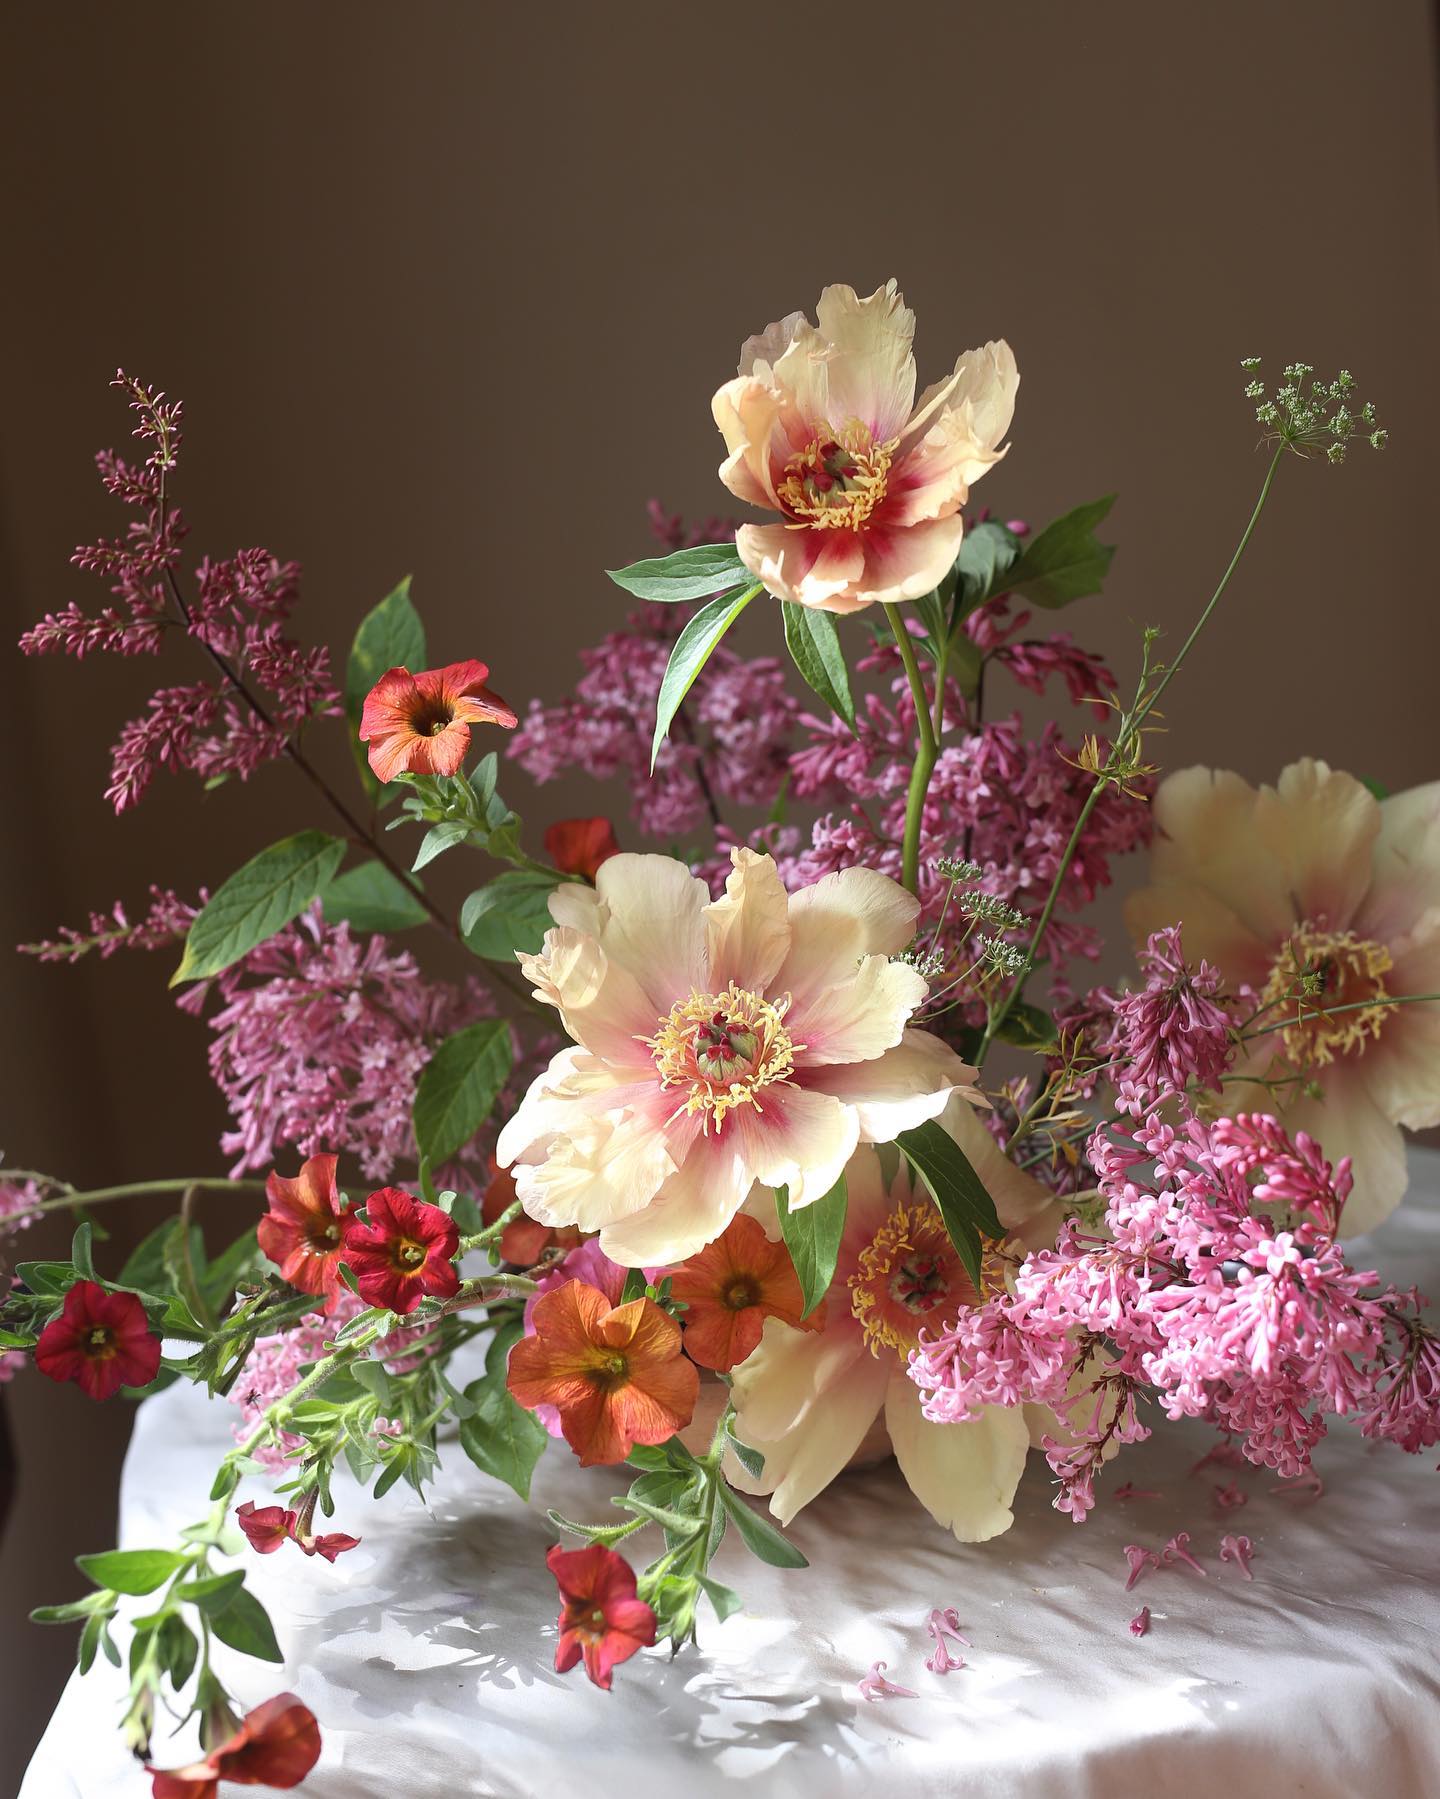 Abstract Floral Designers To Follow Ruffledblog